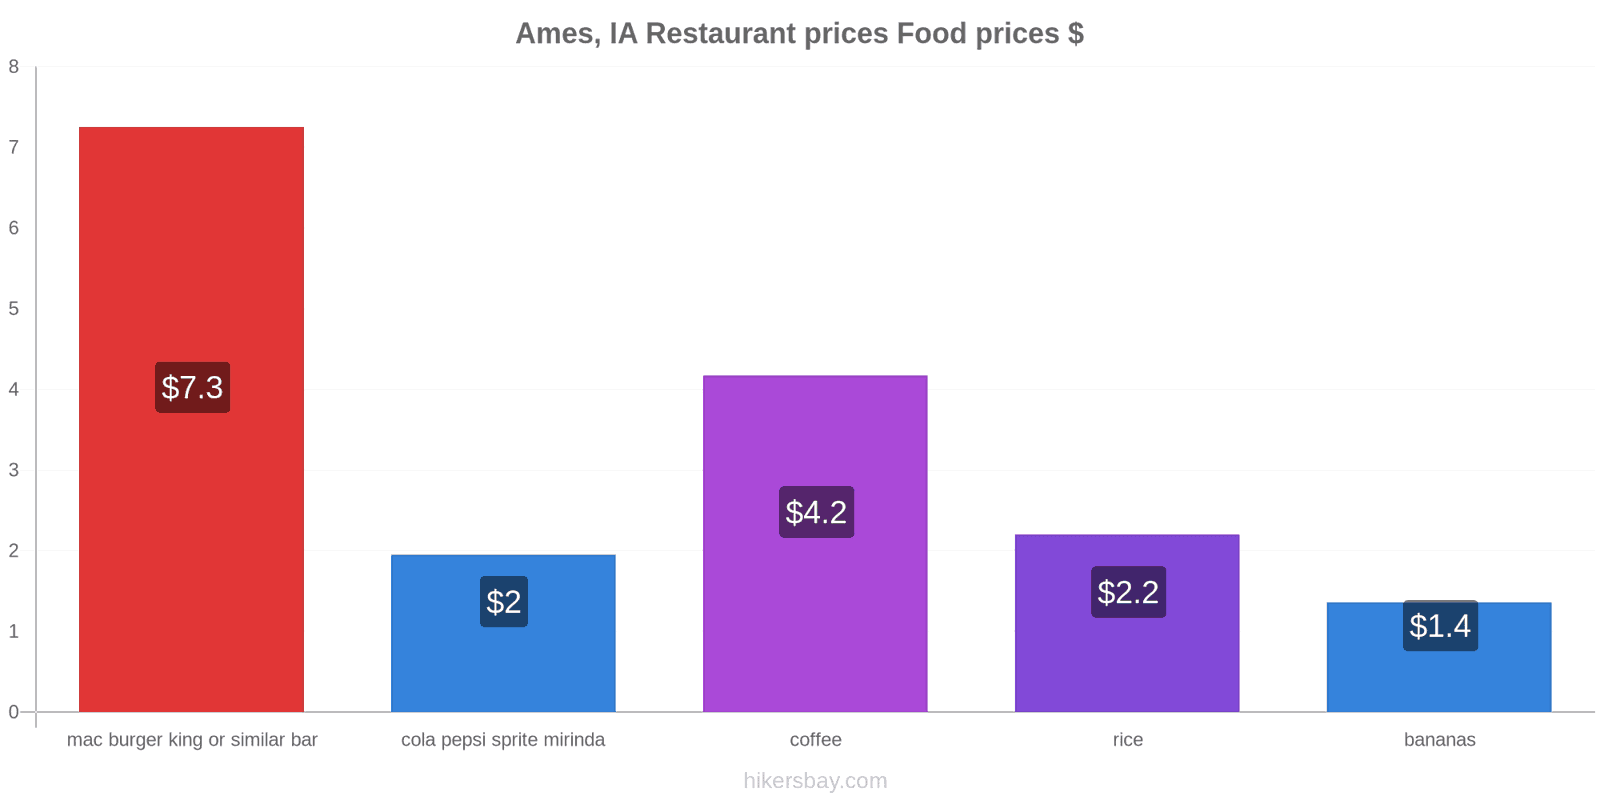 Ames, IA price changes hikersbay.com